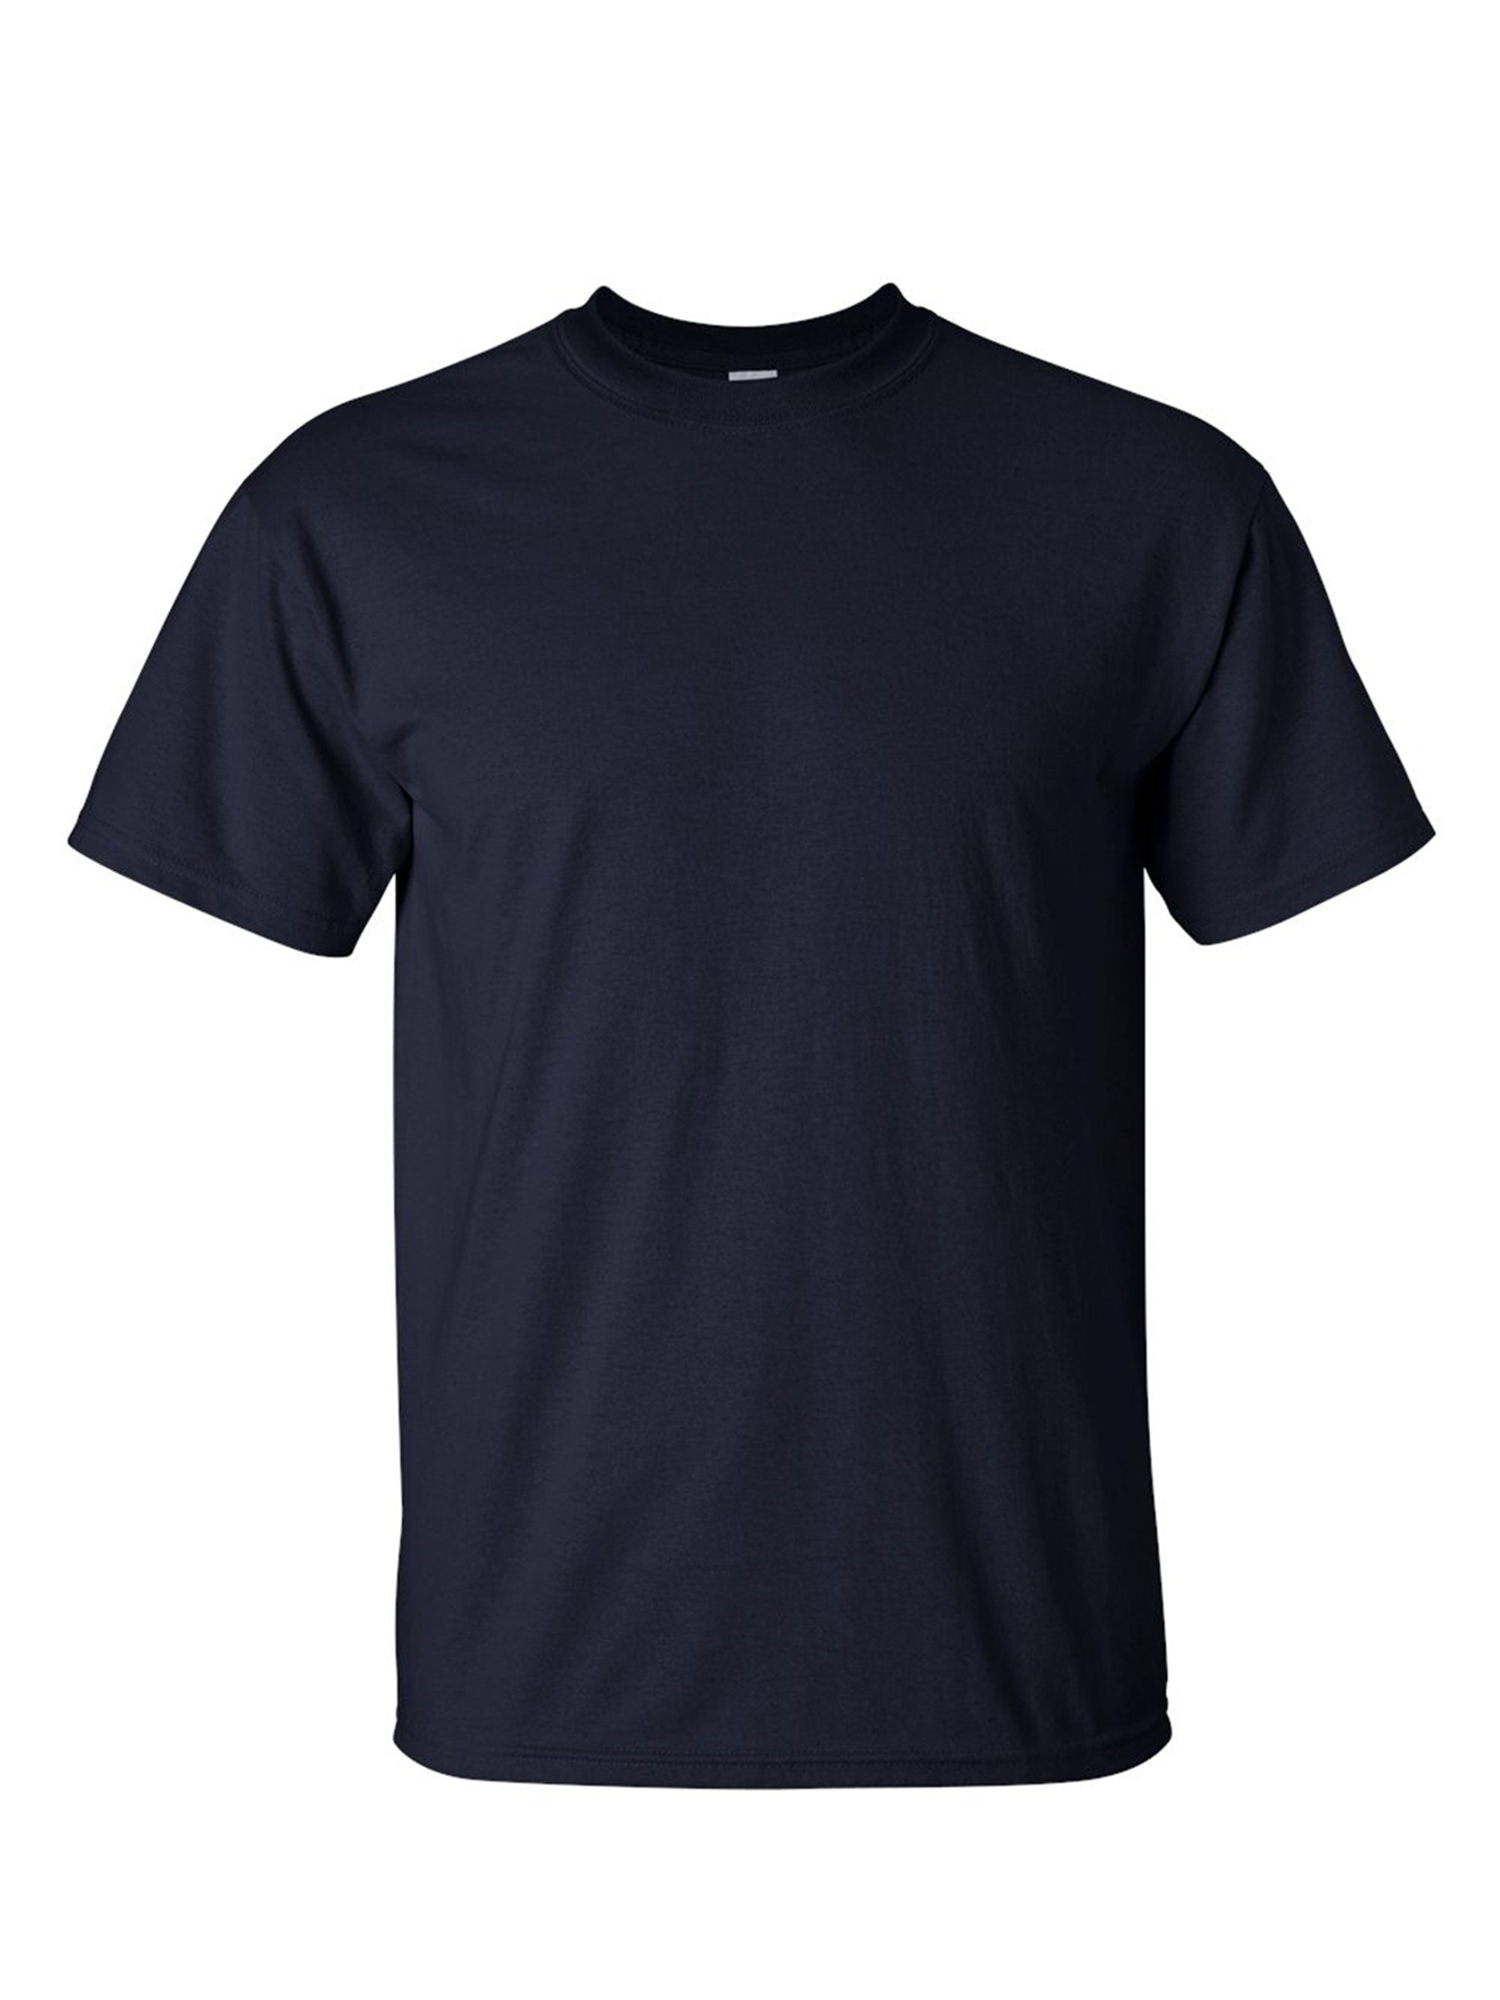 Navy T shirts XLT T Shirts for Men 2XLT 3XLT Big & Tall T Shirts Tall Mens Shirts Big & Tall T Shirts Big and Tall T Shirt for Men Tall Sizes Gildan Ultra Cotton Tall T-Shirt - 2000T - image 1 of 2